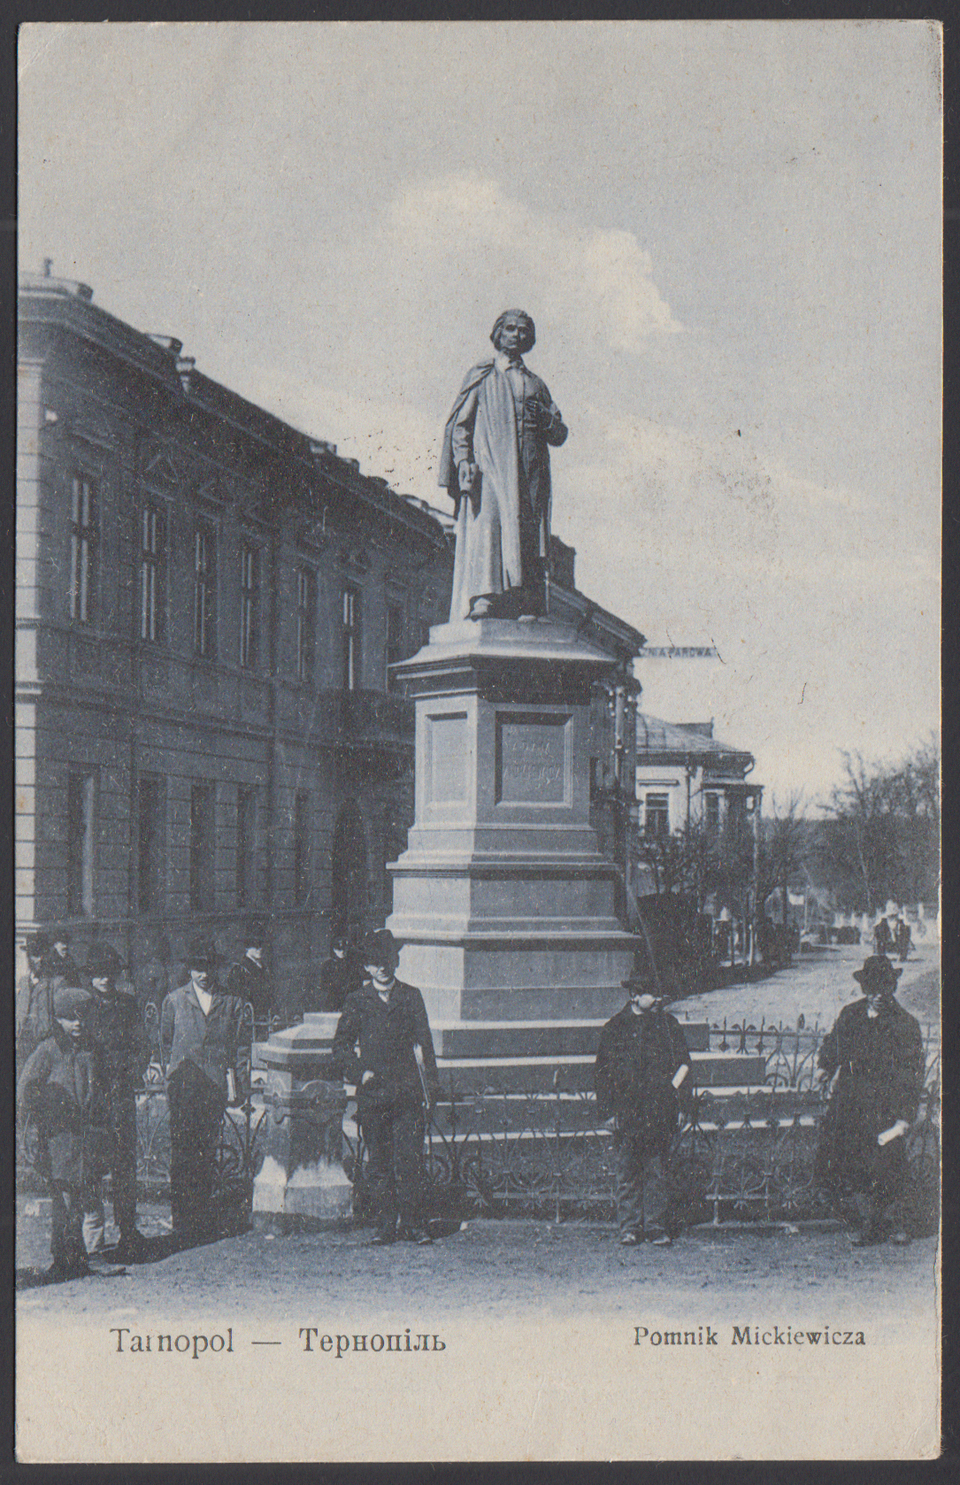 05. Pomnik Mickiewicza (avers)